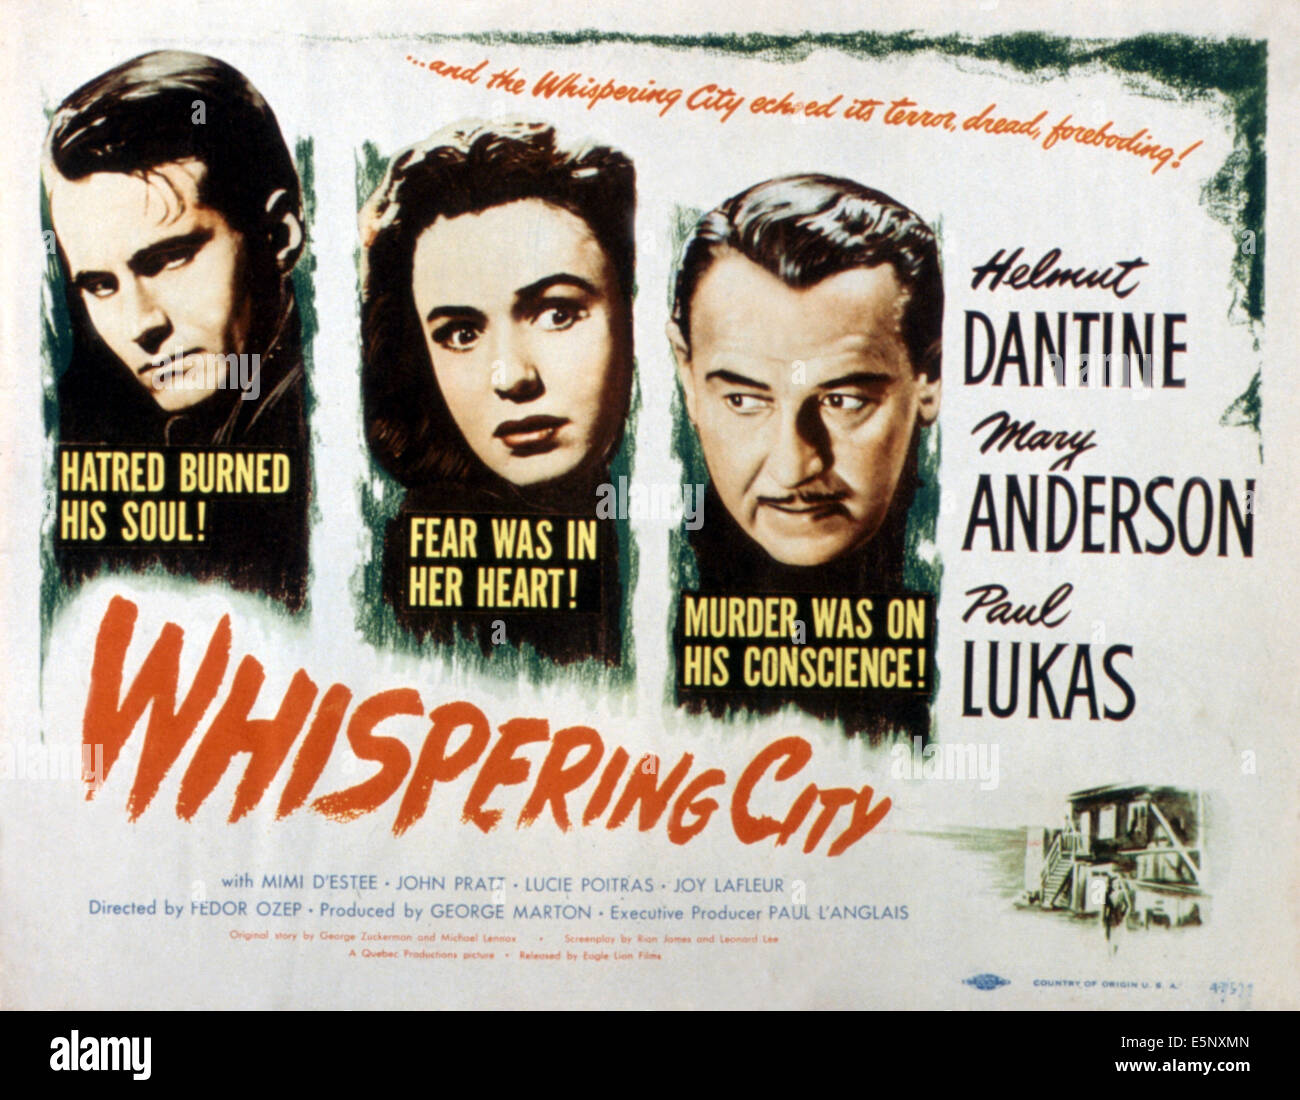 WHISPERING CITY, Helmut Dantine, Mary Anderson, Paul Lukas, 1947 Stock Photo